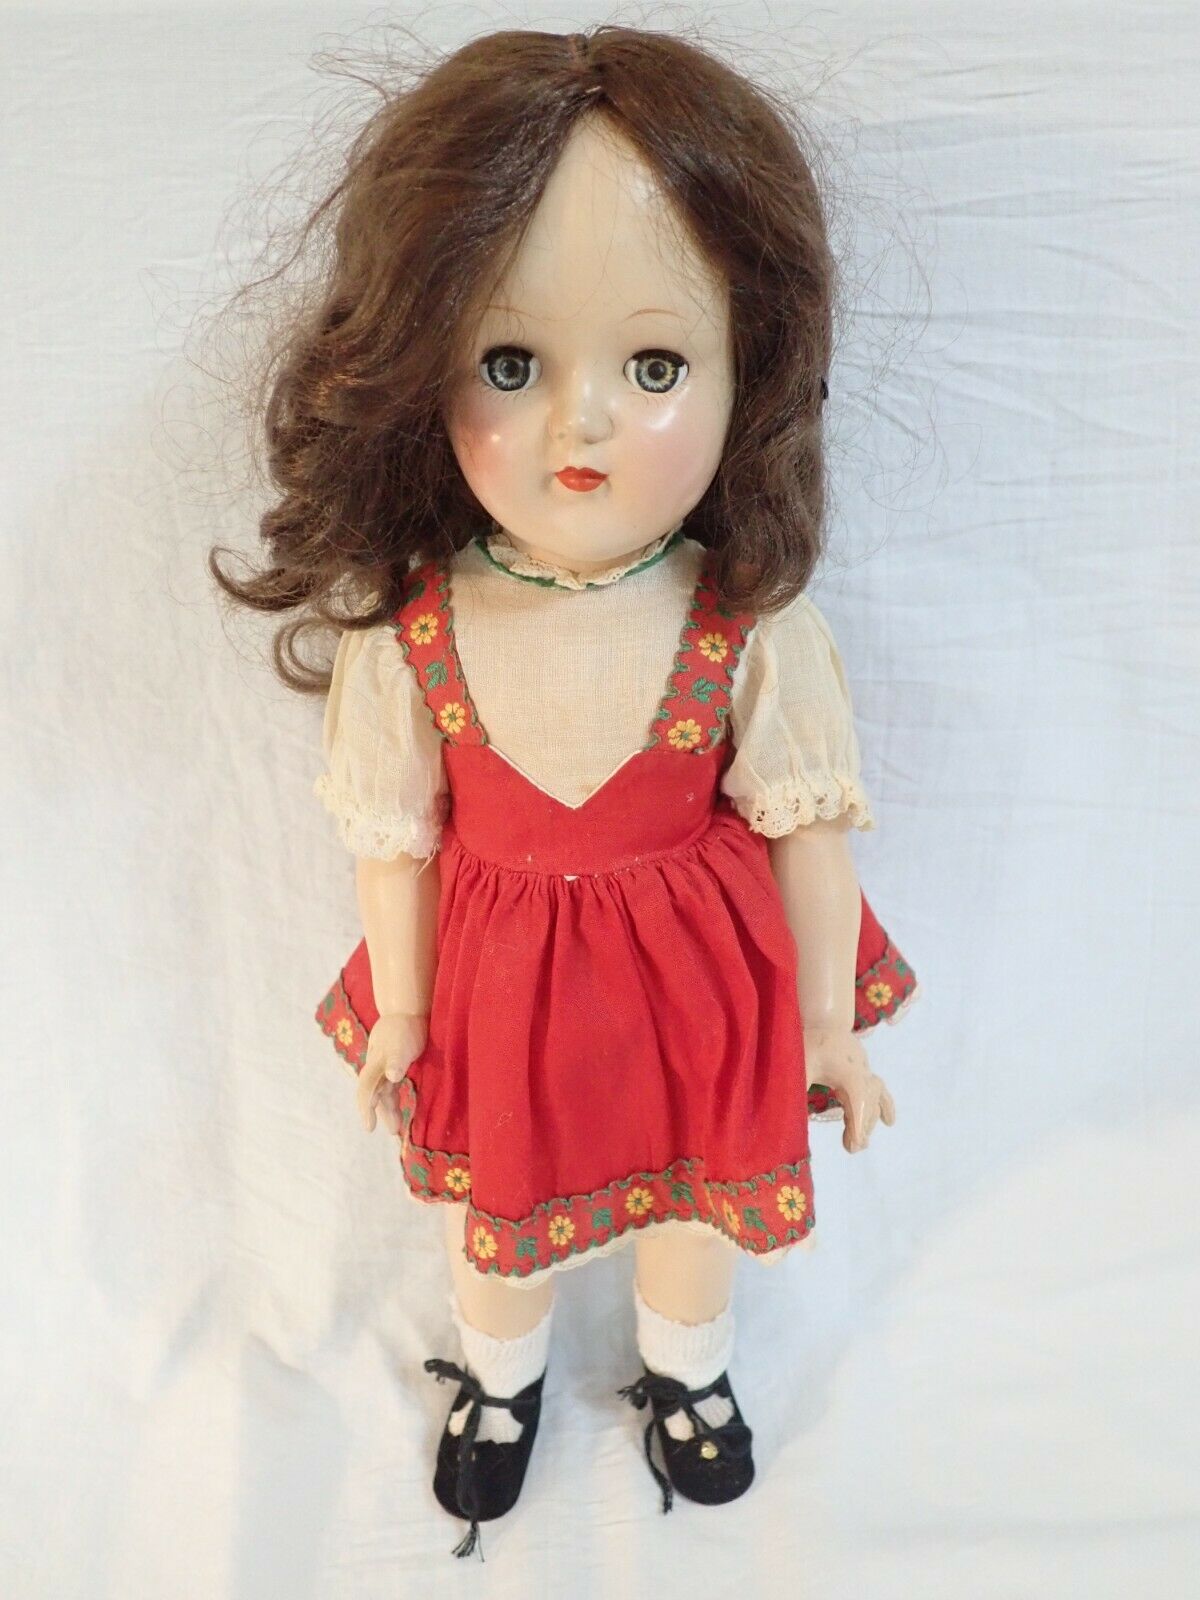 Vintage 15" Ideal P-91 Toni Girl Doll Hard Plastic Body W/ Sleepy Eyes